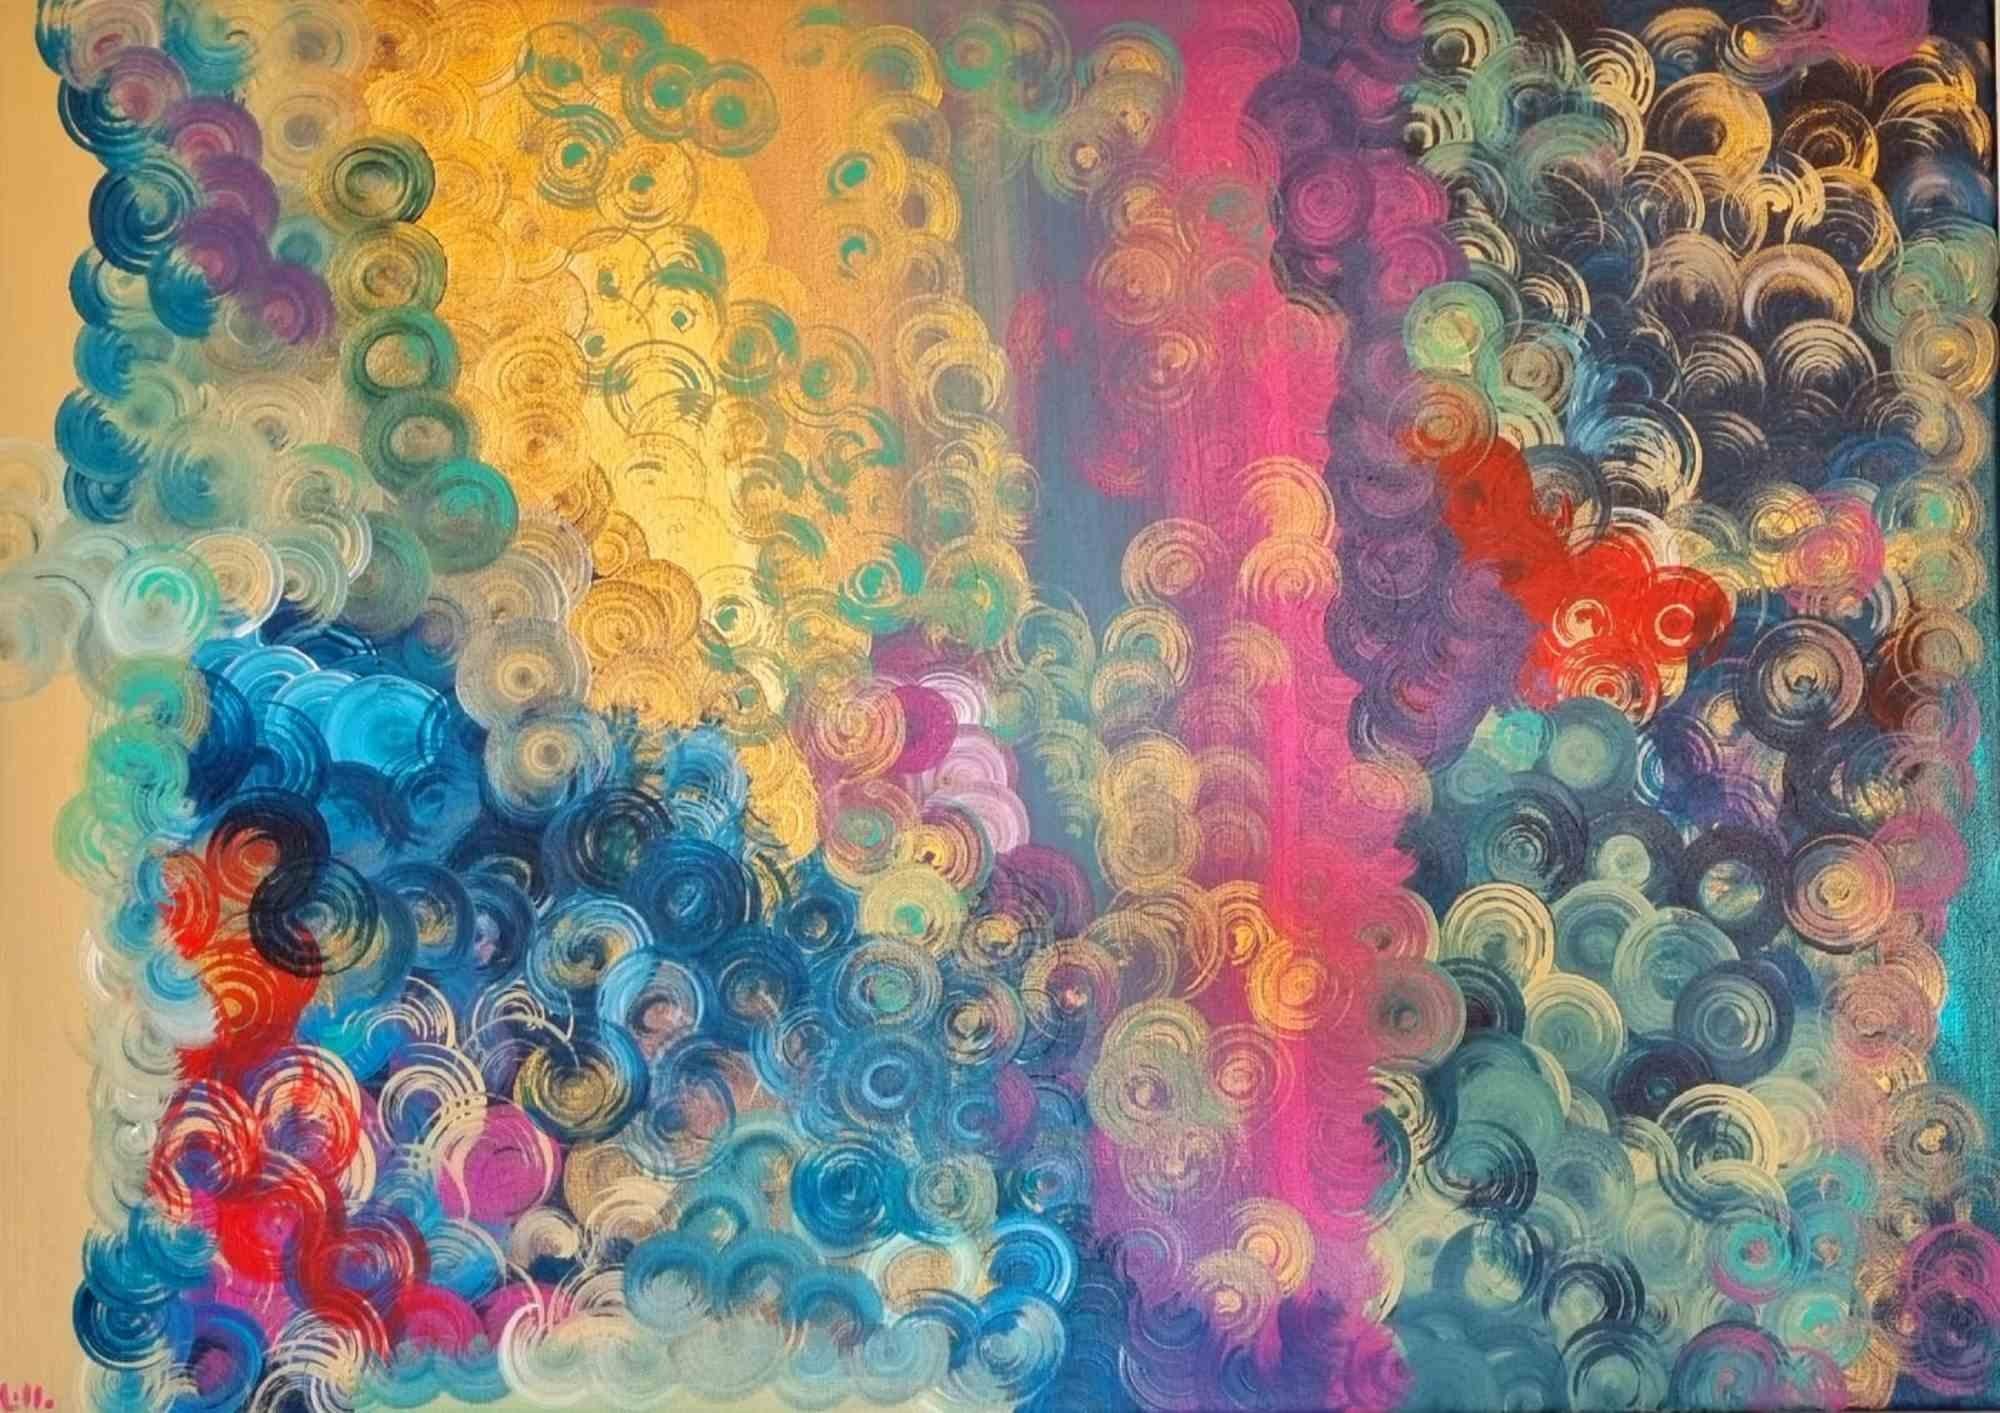 L'oceano abbracciava le stelle - Acrylic on Canvas by Lillo Sauto - 2022